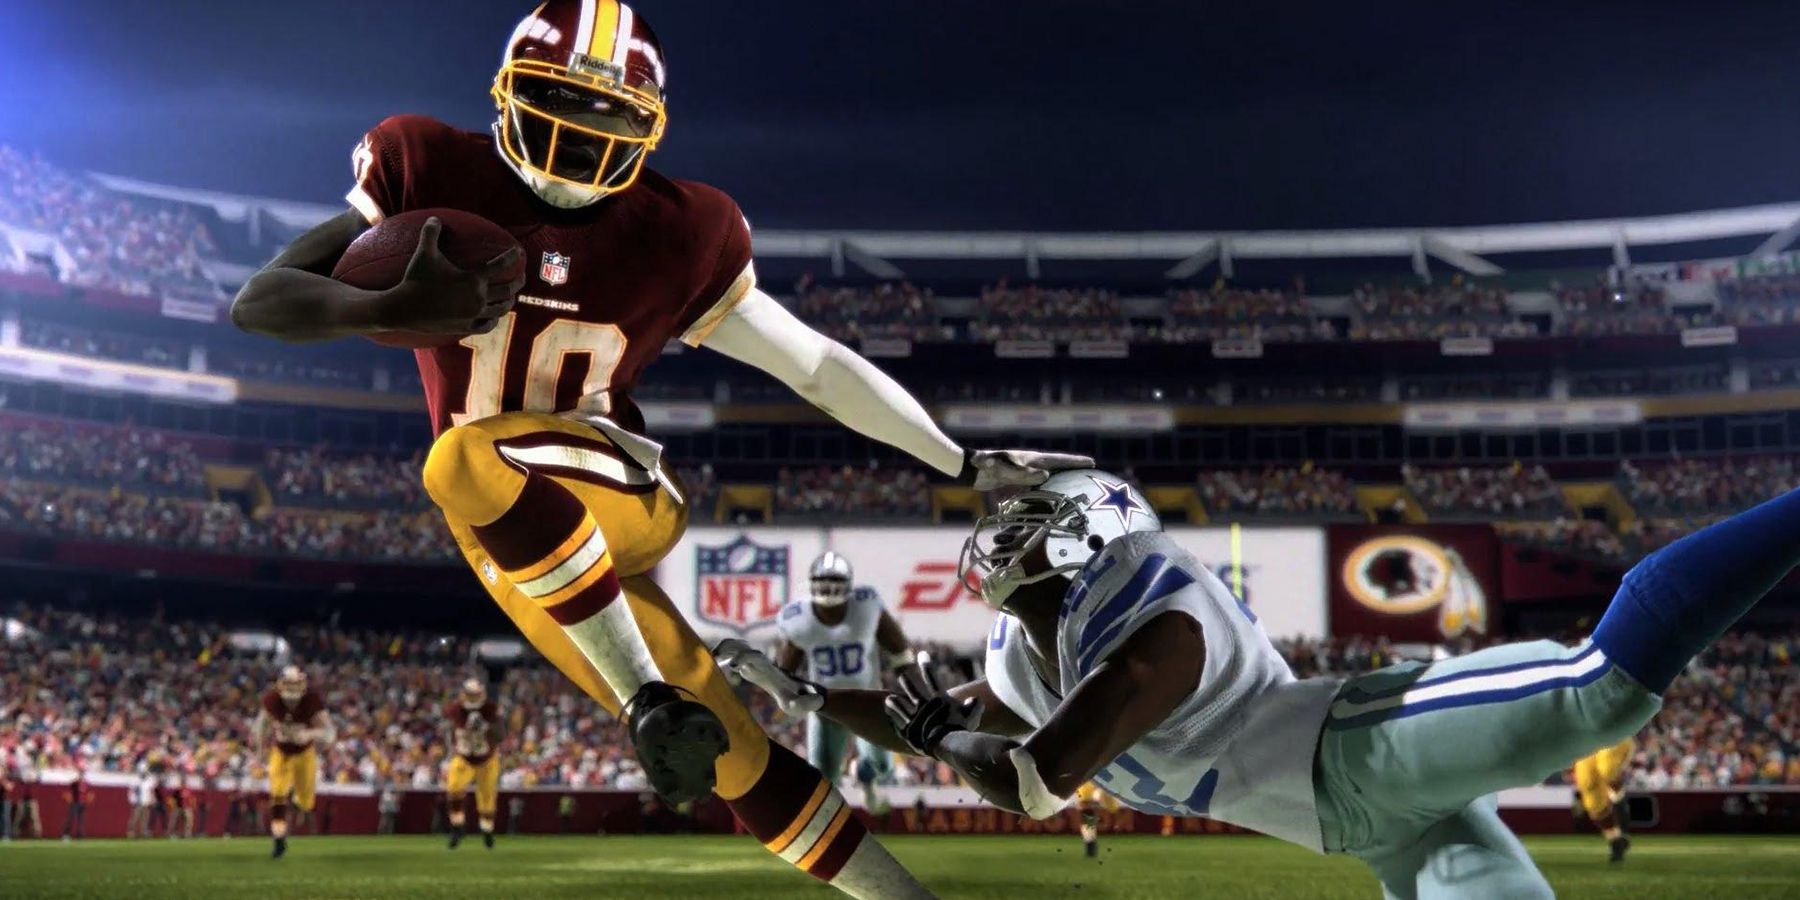 Madden NFL 15, captura de pantalla del anuncio del juego que muestra a un jugador evitando una entrada fallida.